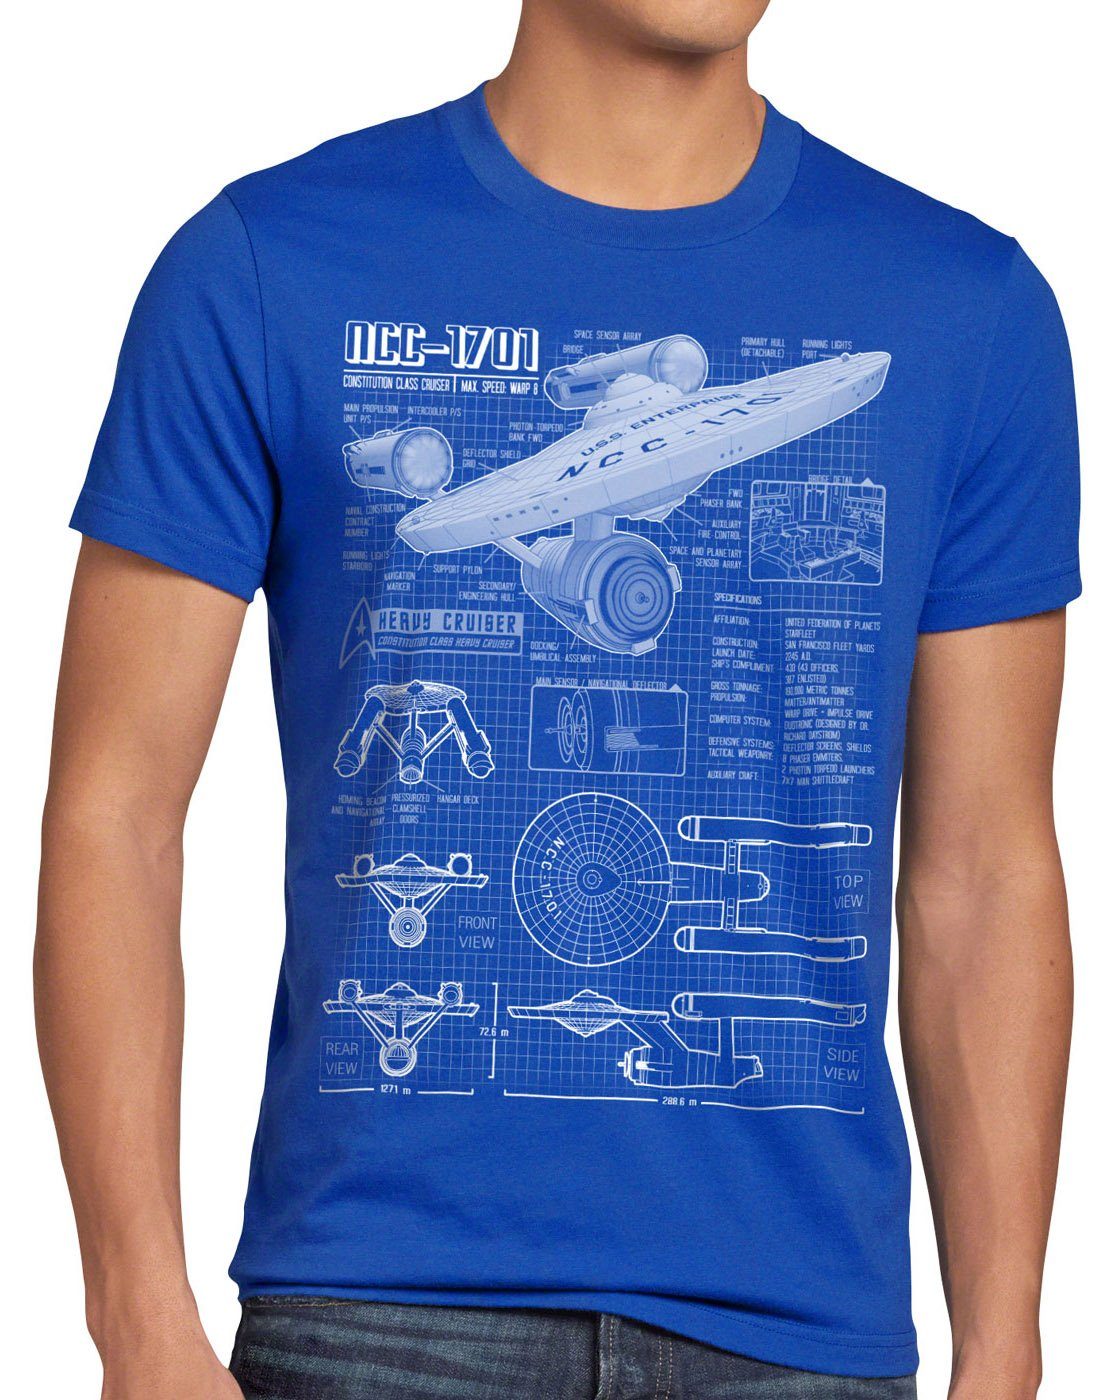 style3 Print-Shirt pike T-Shirt sternenflotte star christopher trekkie trek NCC-1701 Herren klingon